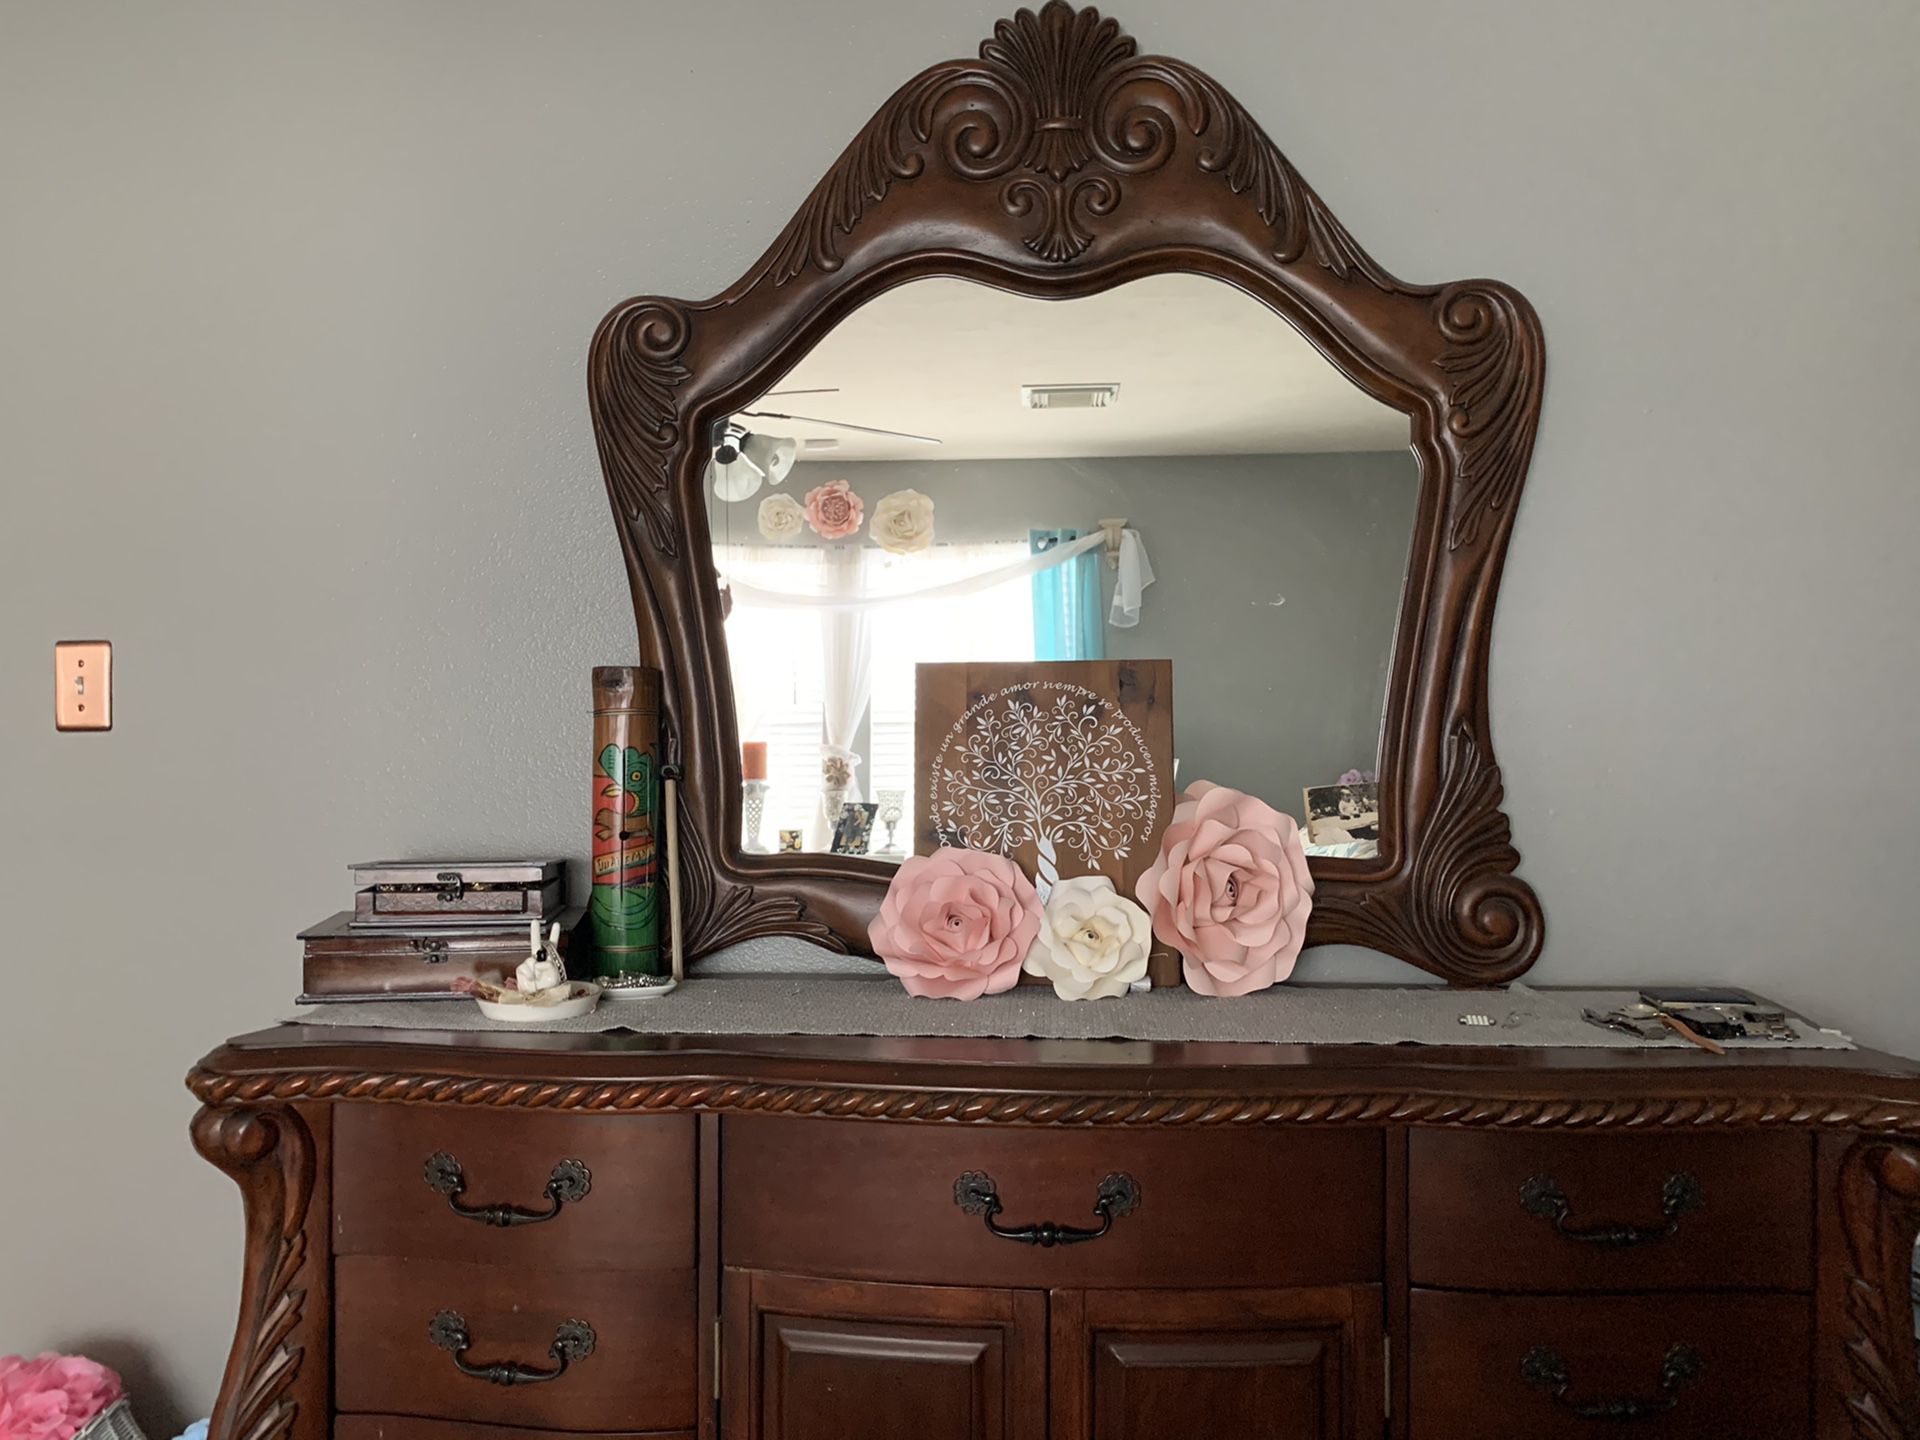 Room dresser with mirror